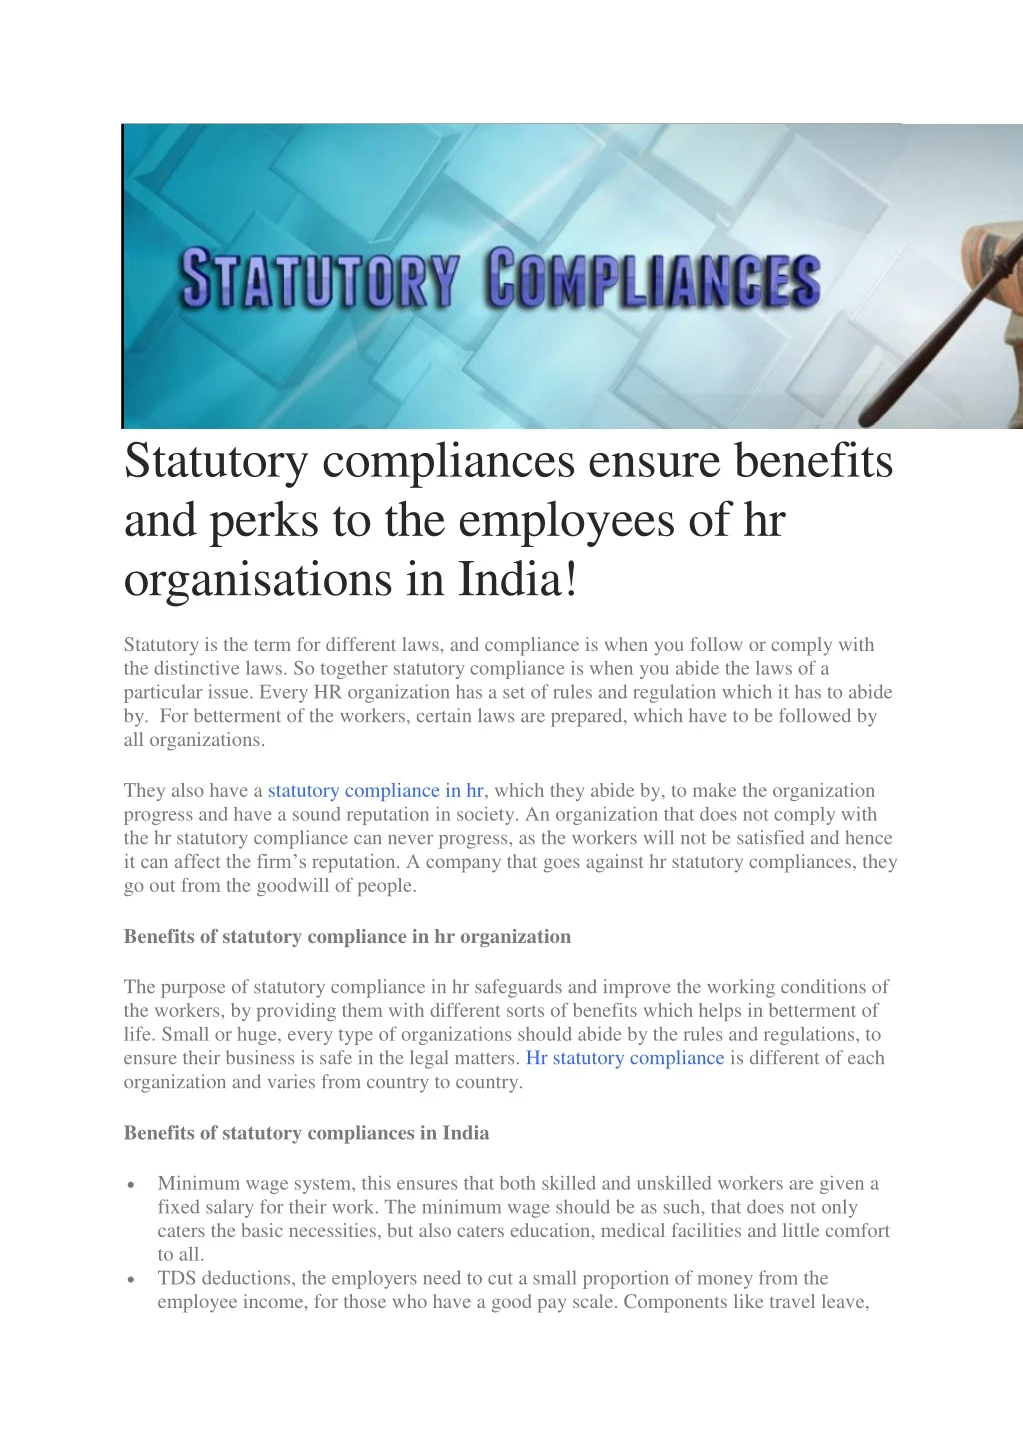 statutory compliances ensure benefits and perks